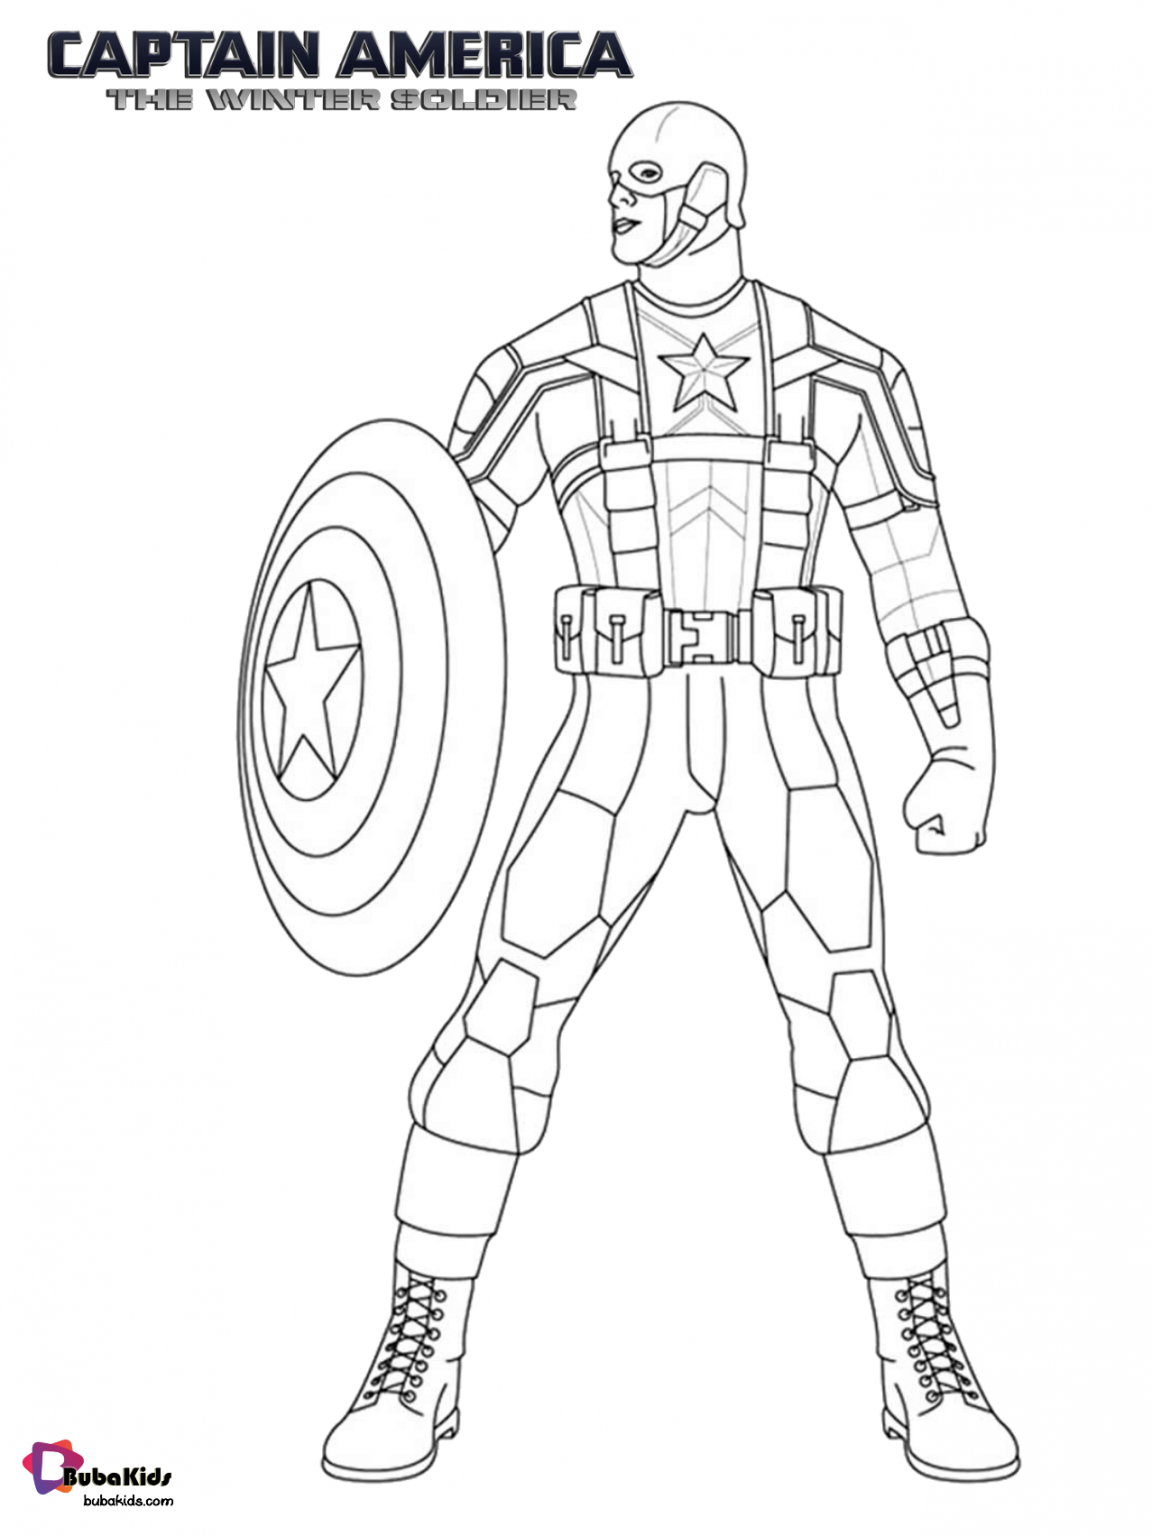 Superhero Captain America coloring page. | BubaKids.com